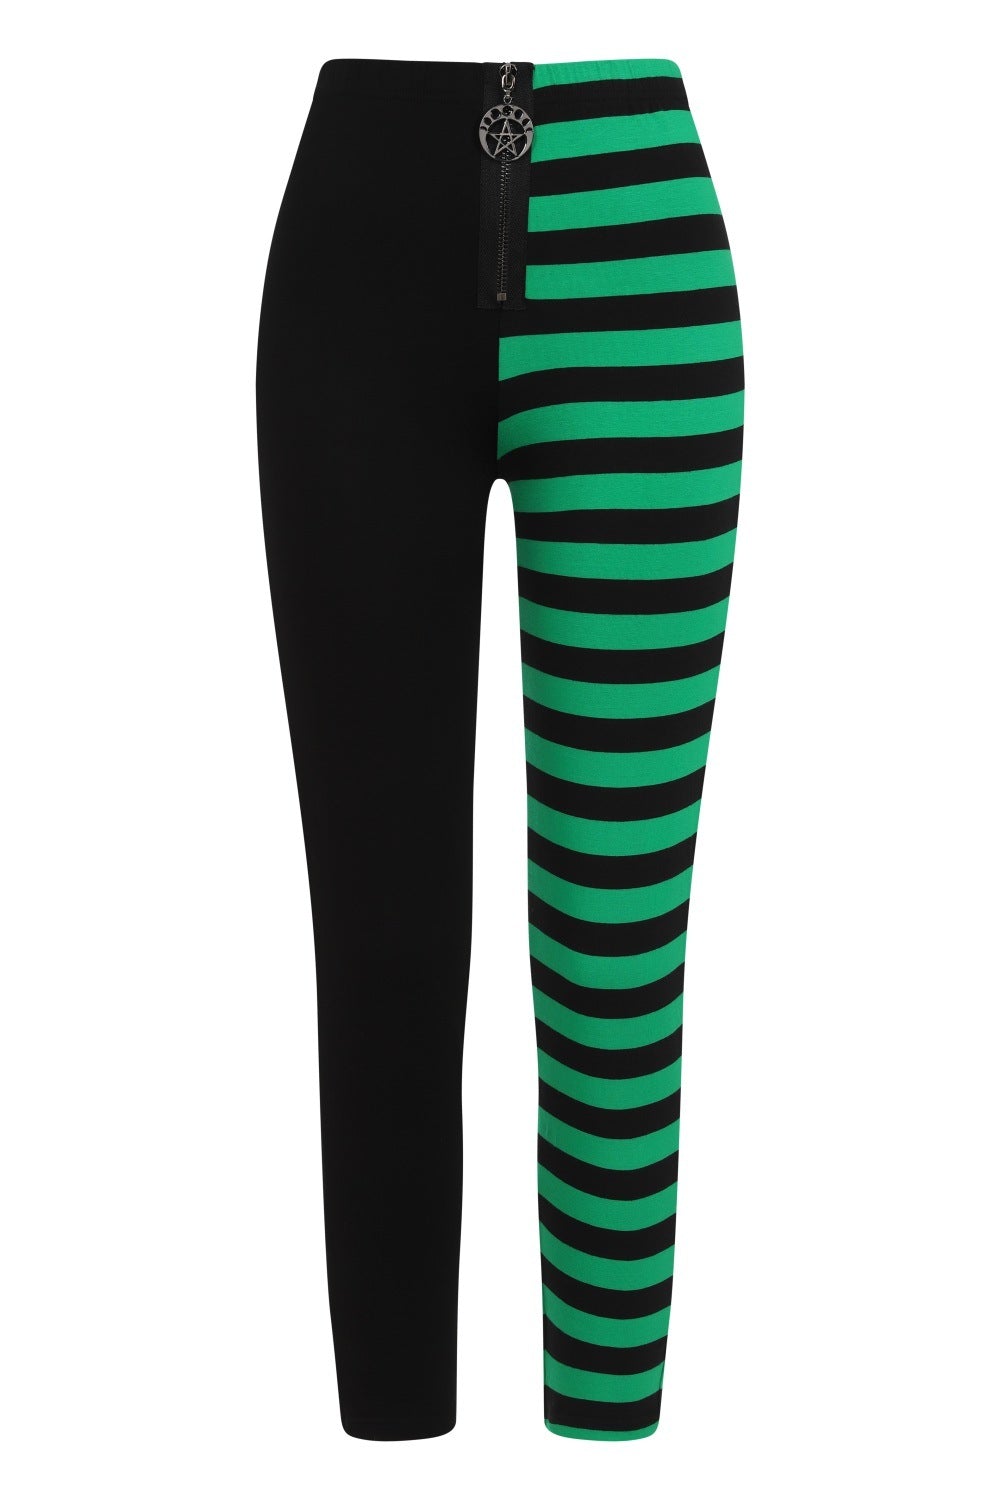 High waisted leggings with one black leg and one green striped leg. Pentagram zip detail. 